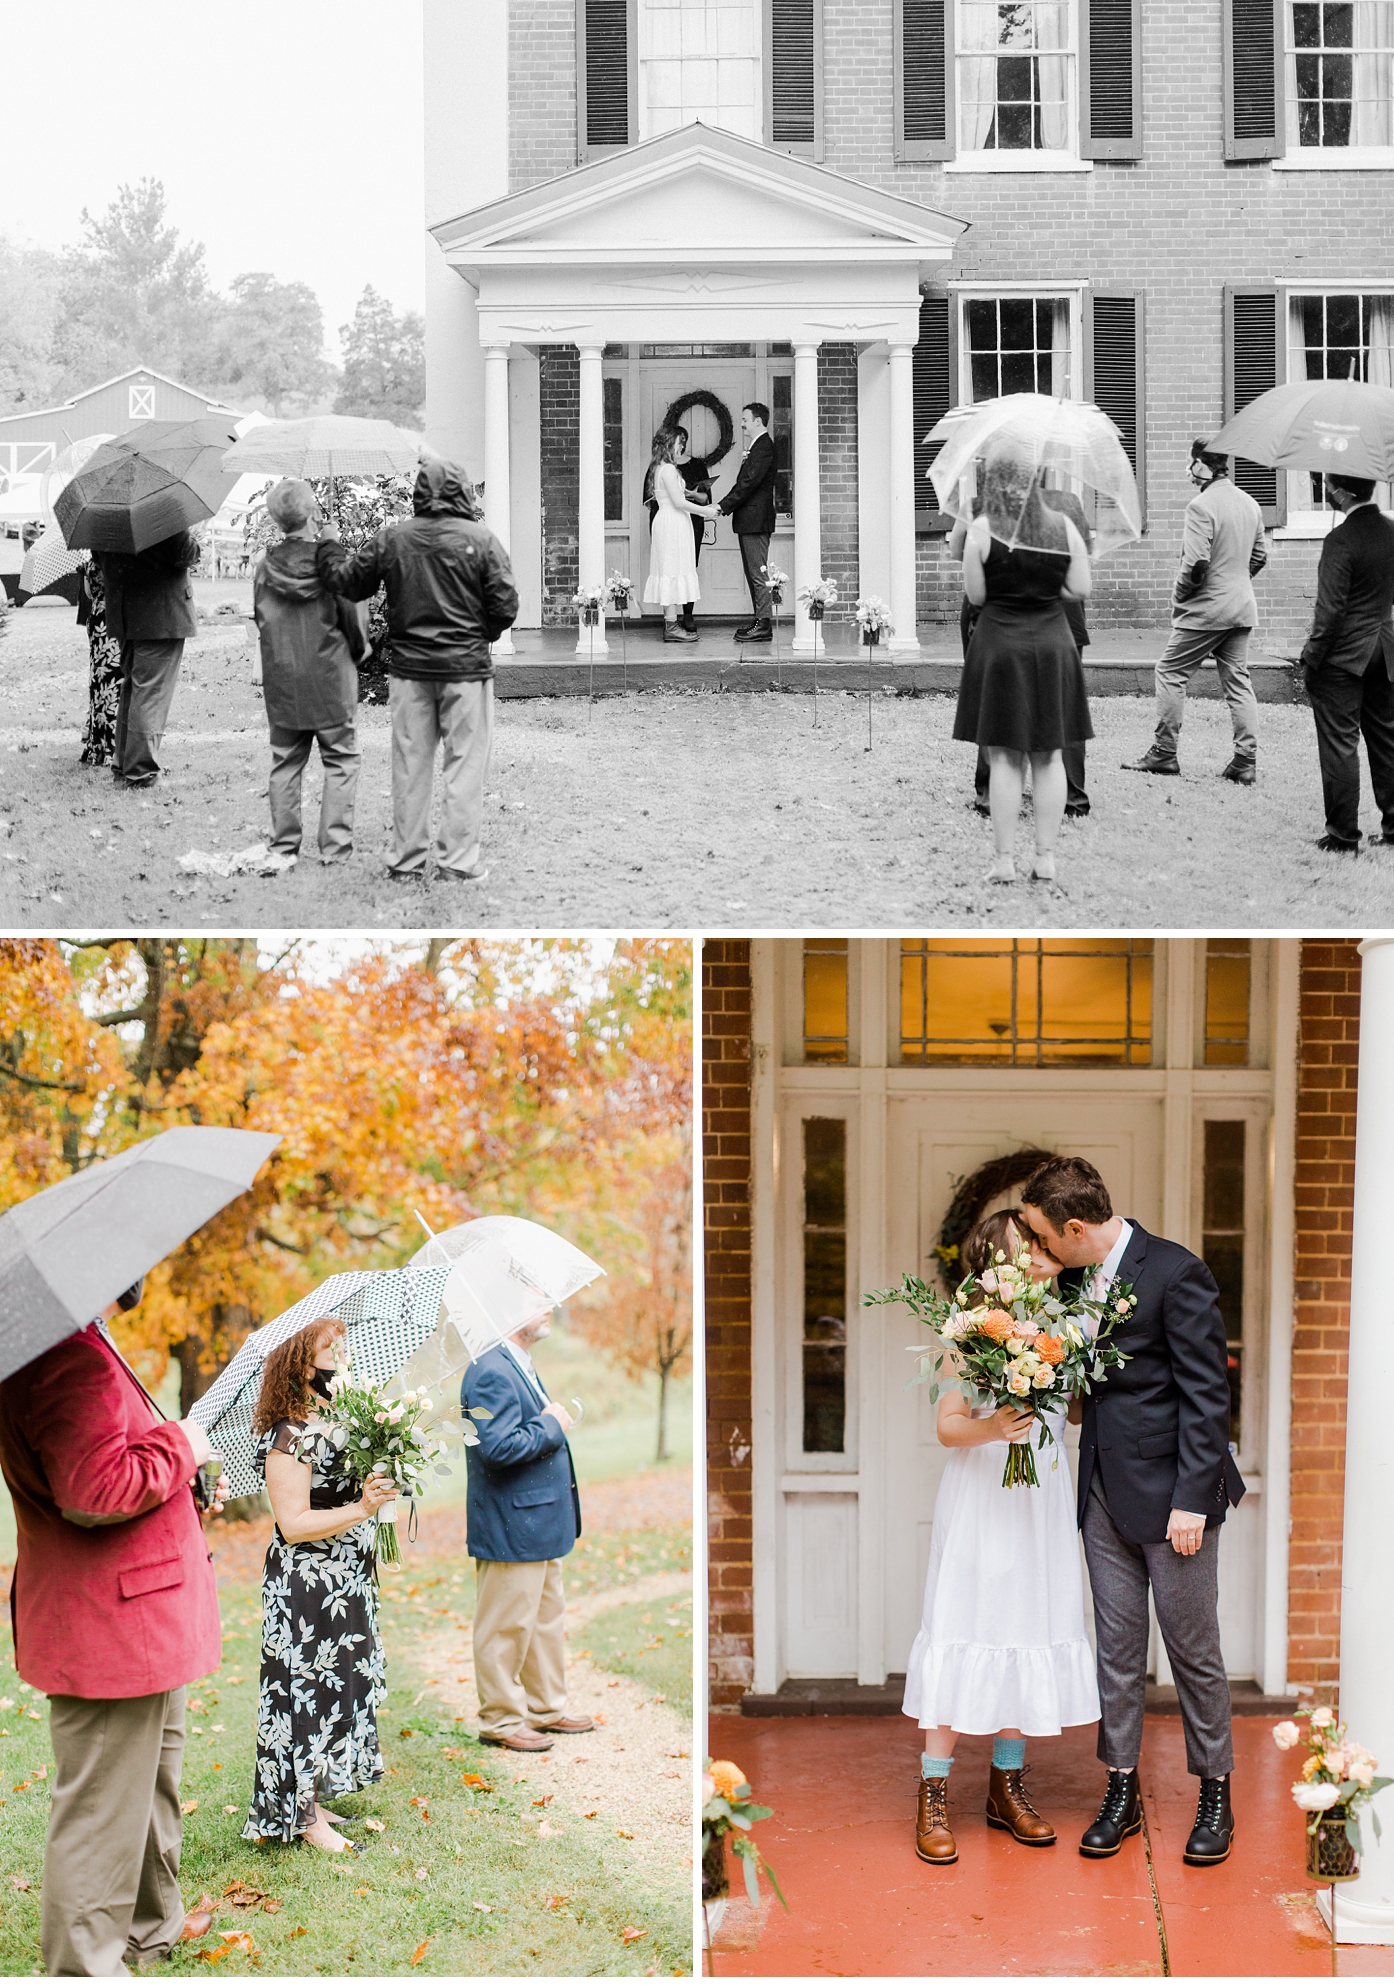 Intimate Outdoor Wedding Ceremony in Rain